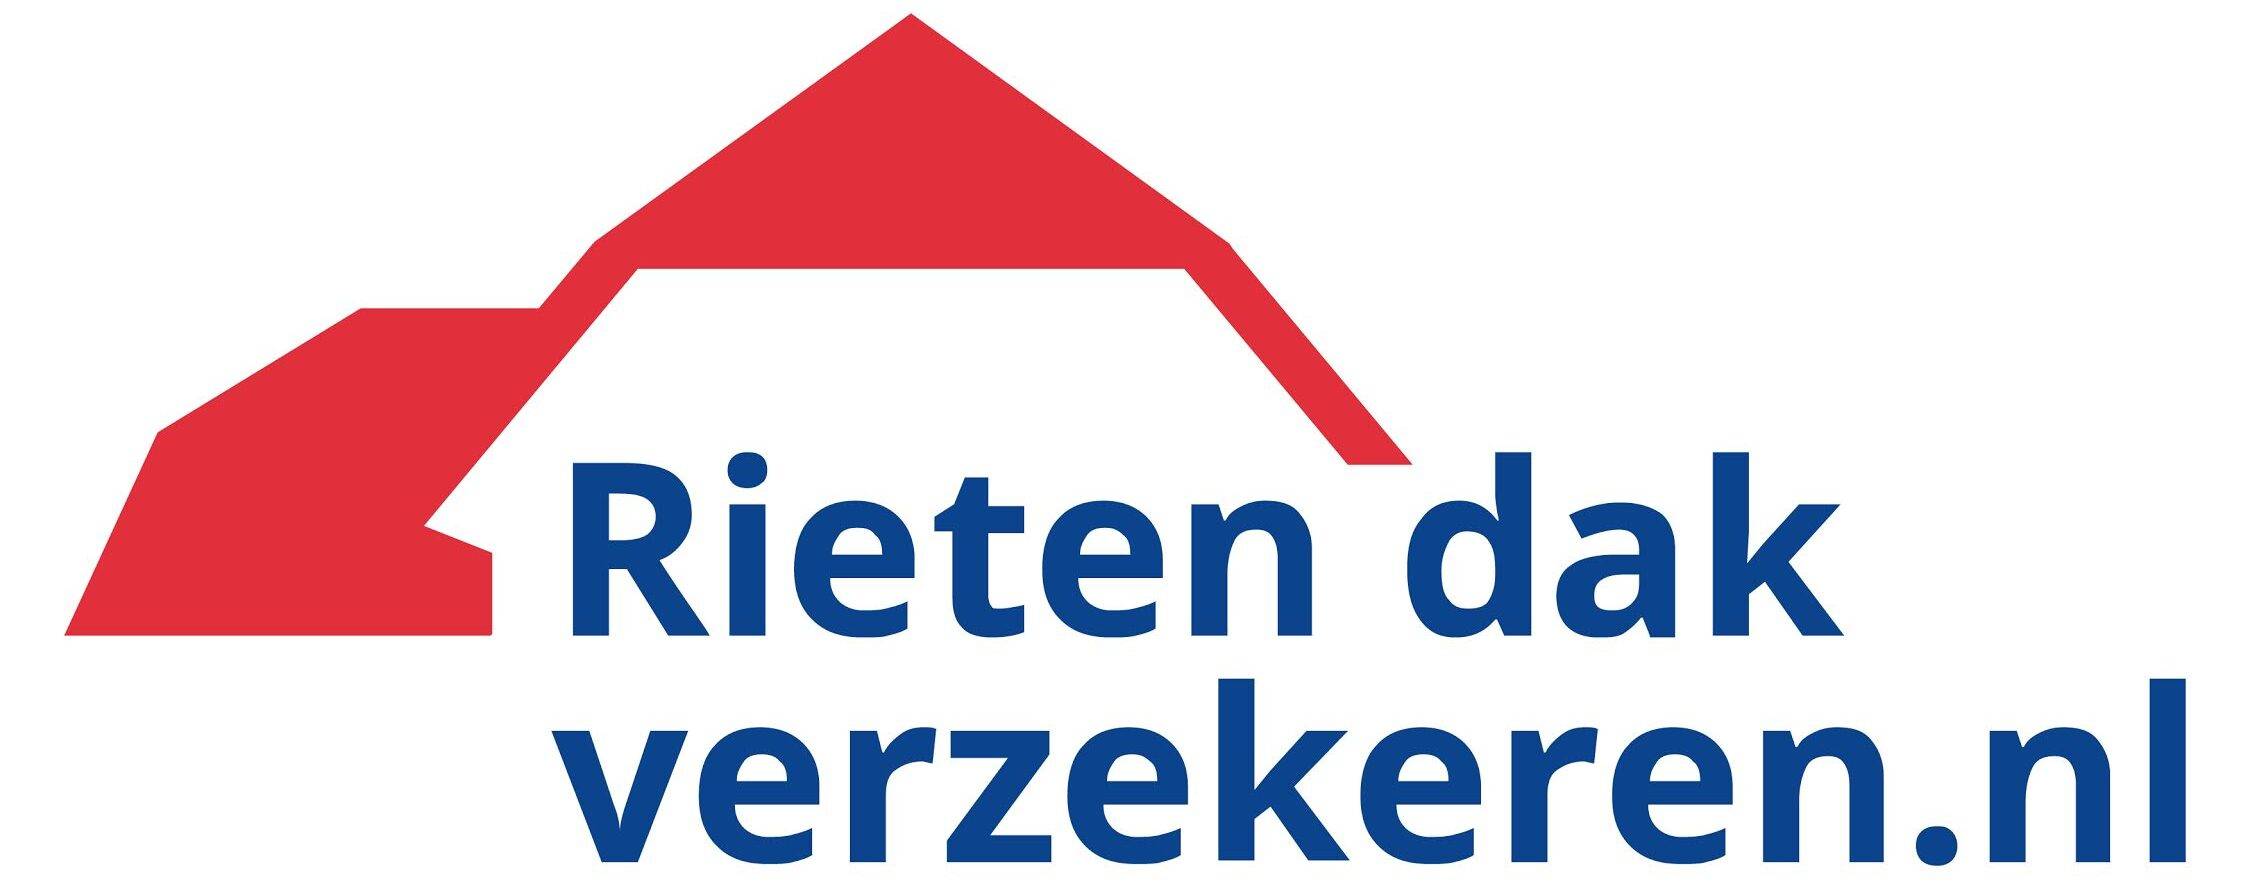 Rietendakverzekeren.nl